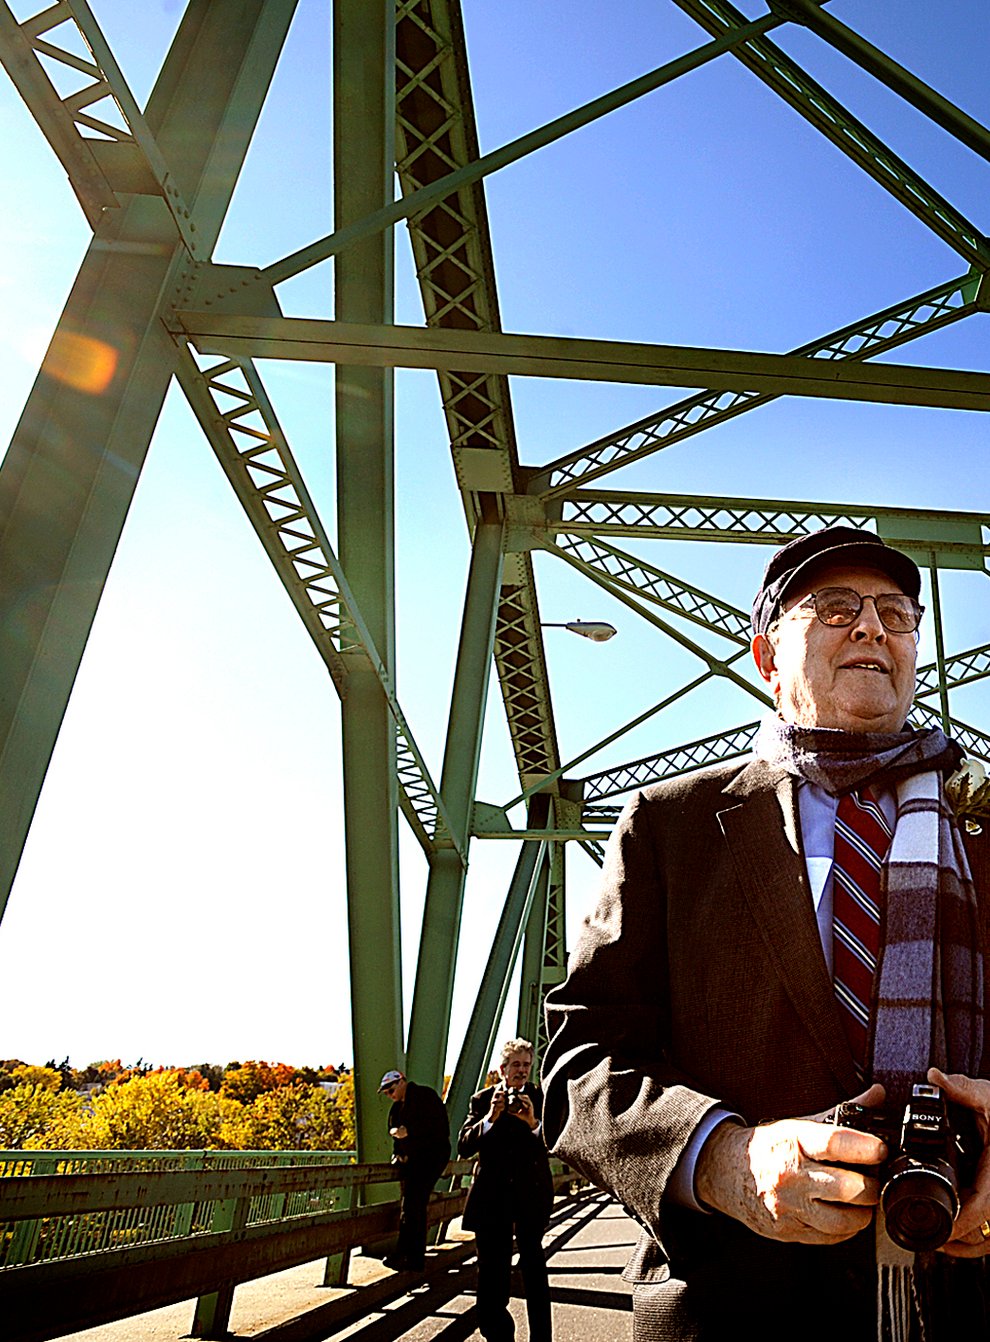 Dr Bernard Lown walks on the bridge renamed in his honour (Jose Leiva/AP)